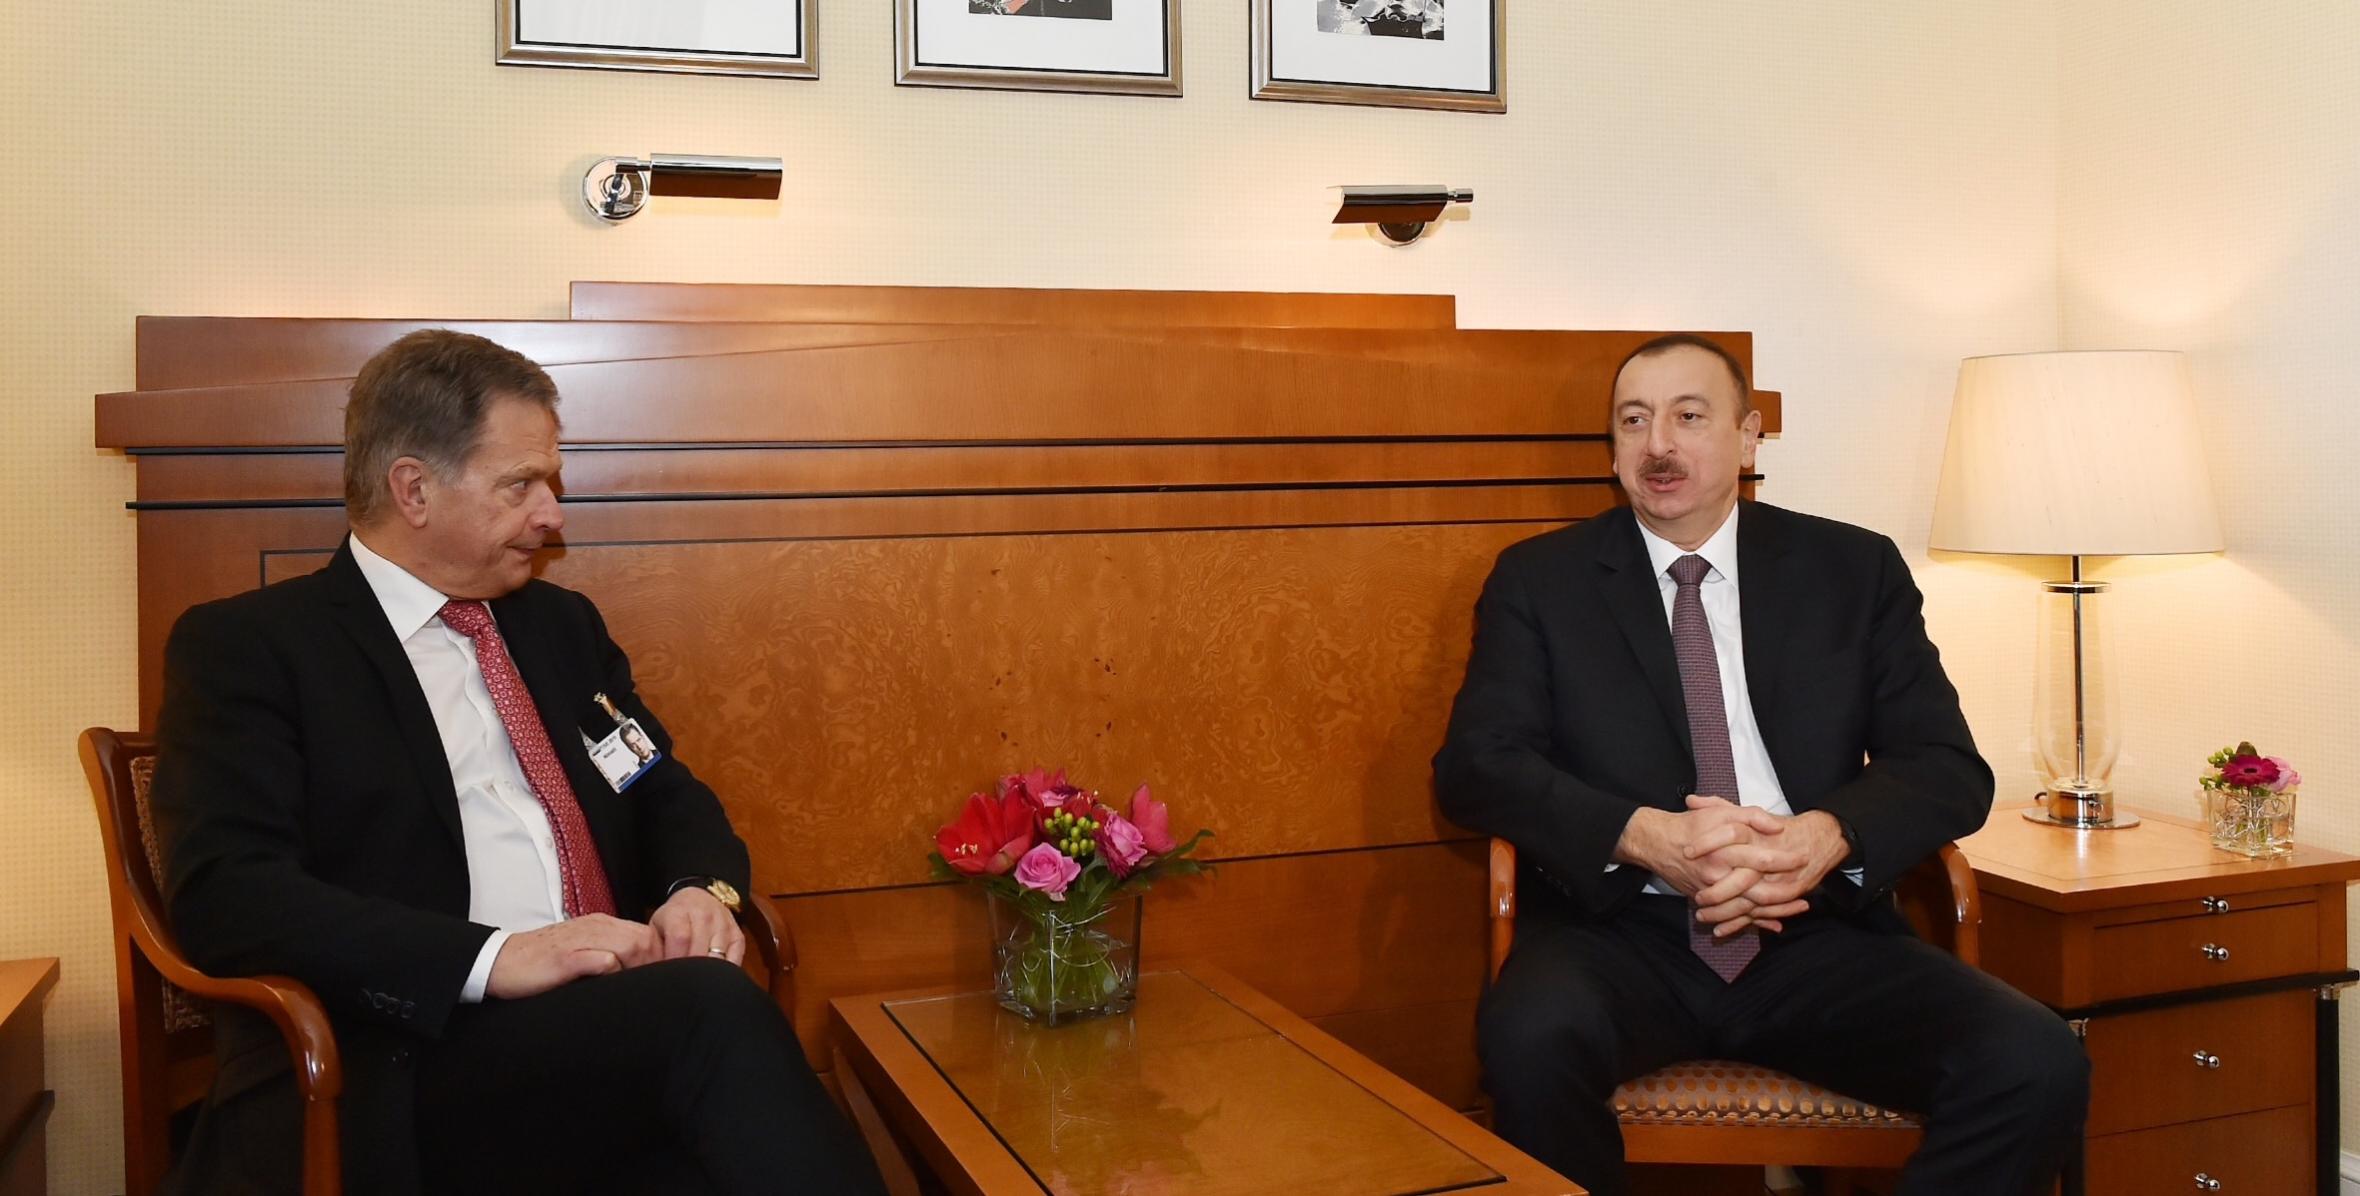 Ilham Aliyev met with President of Finland Sauli Niinistö in Munich